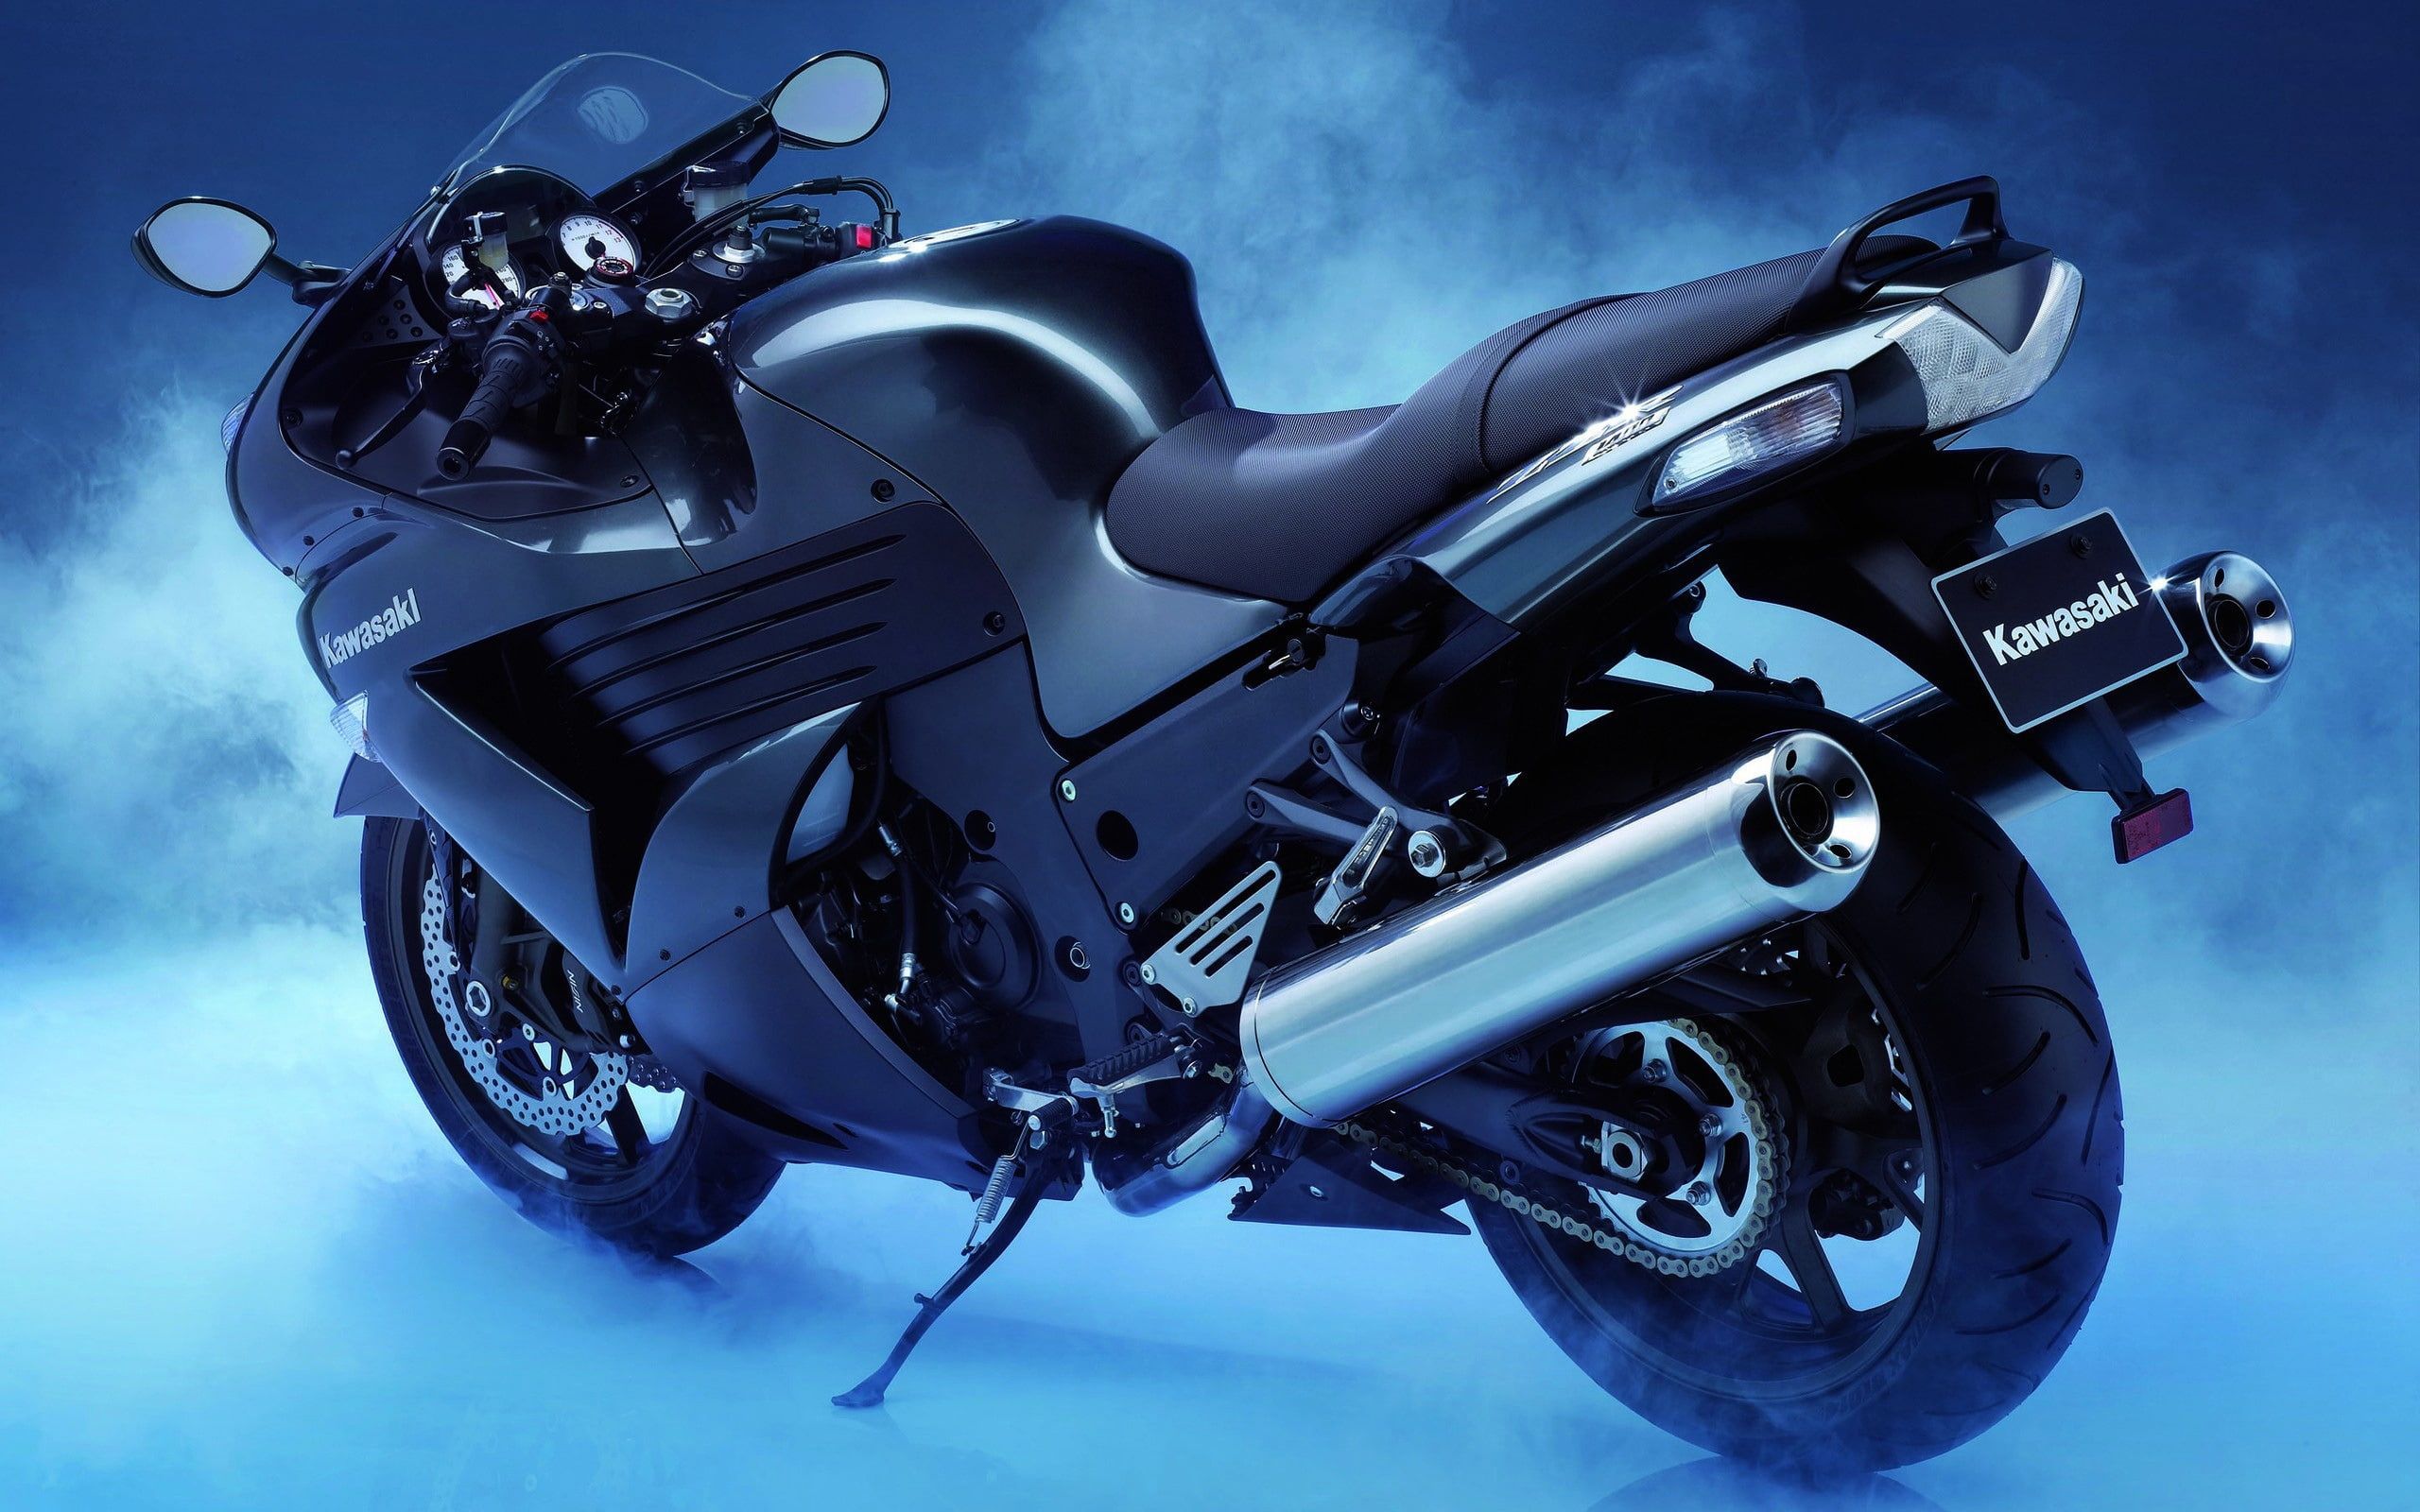 Kawasaki Ninja Black, black and white sports bike Kawasaki Ninja K # wallpaper #hdwallpaper #desktop. Motorcycle wallpaper, Kawasaki, Ninja motorcycle